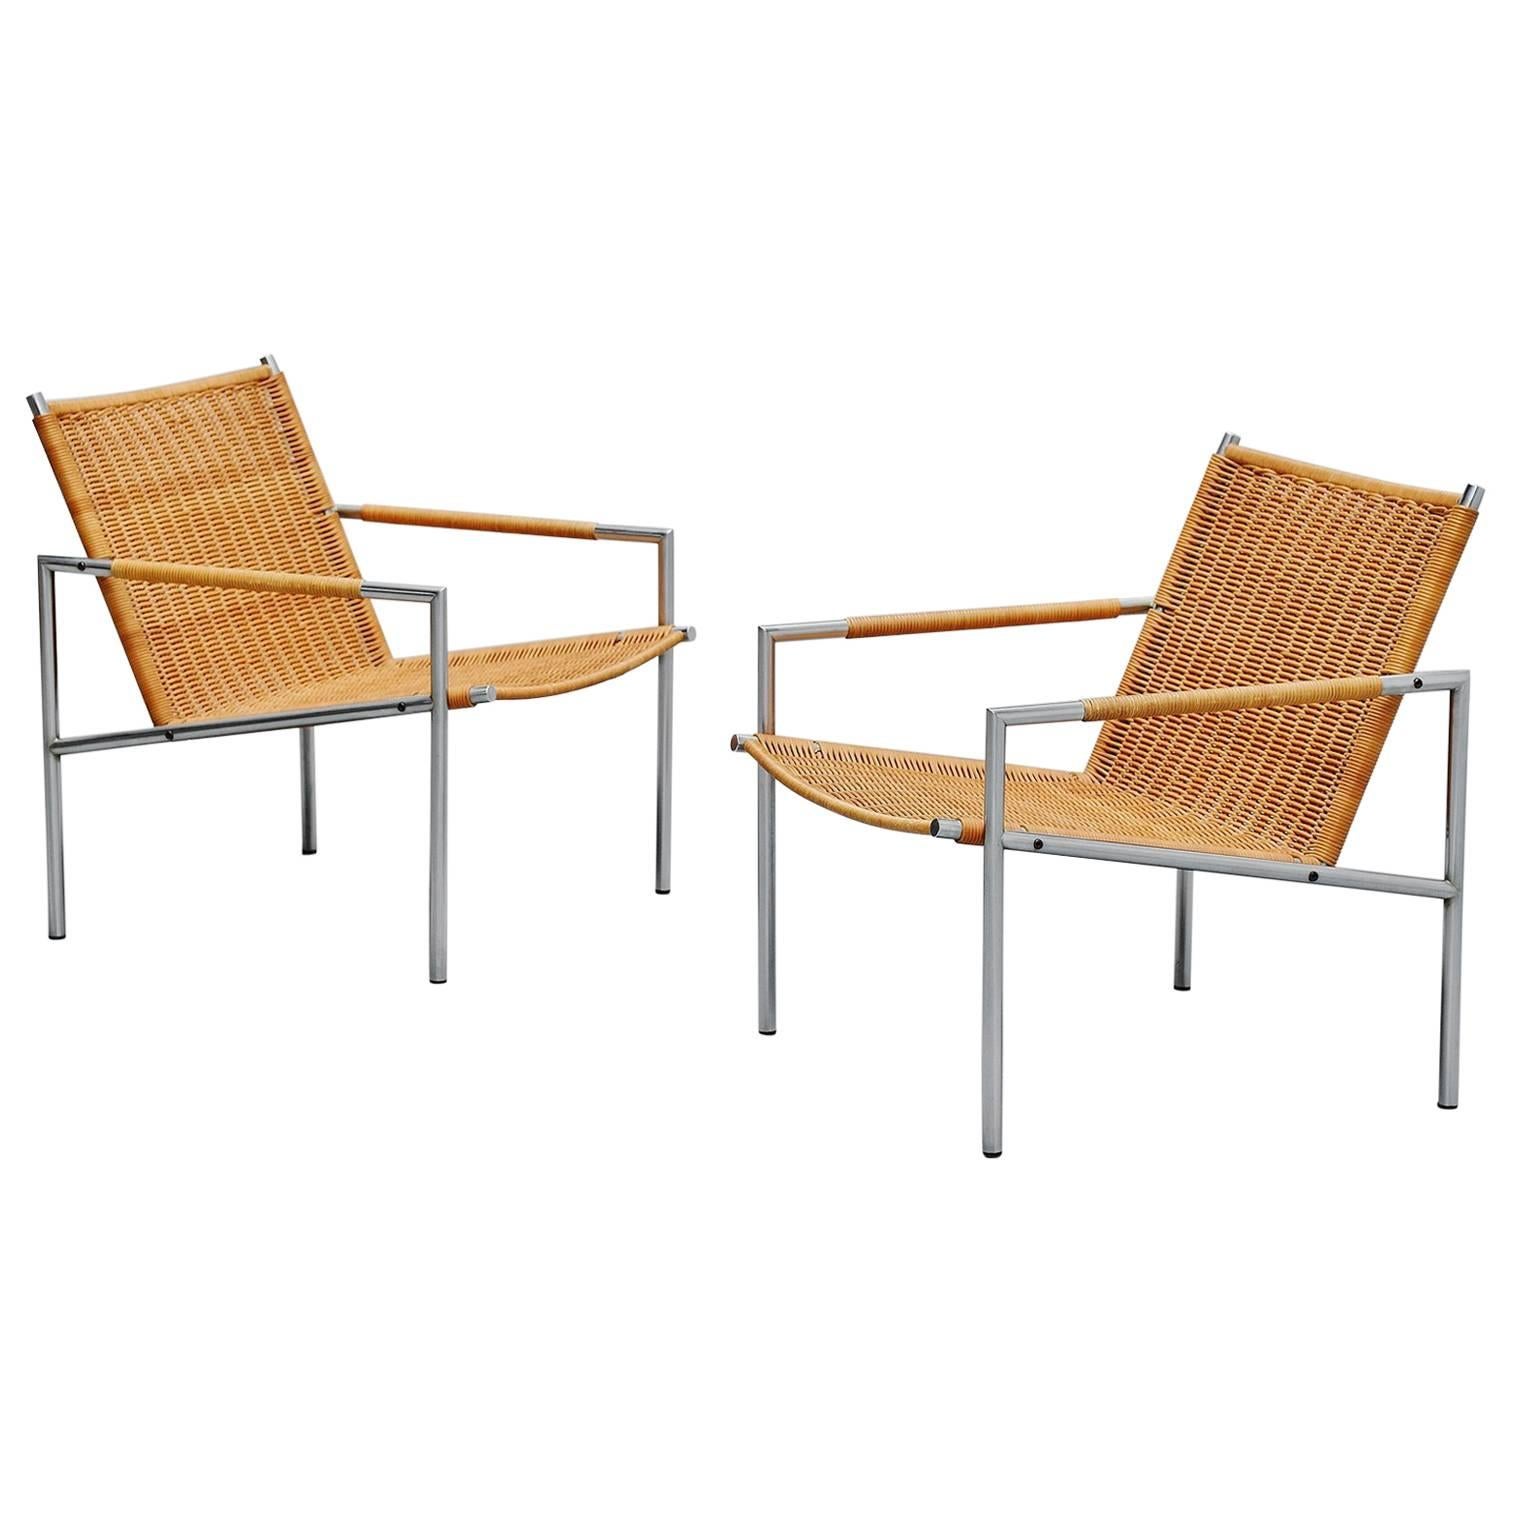 Martin Visser SZ01 Easy Chairs Cane for 't Spectrum, 1965